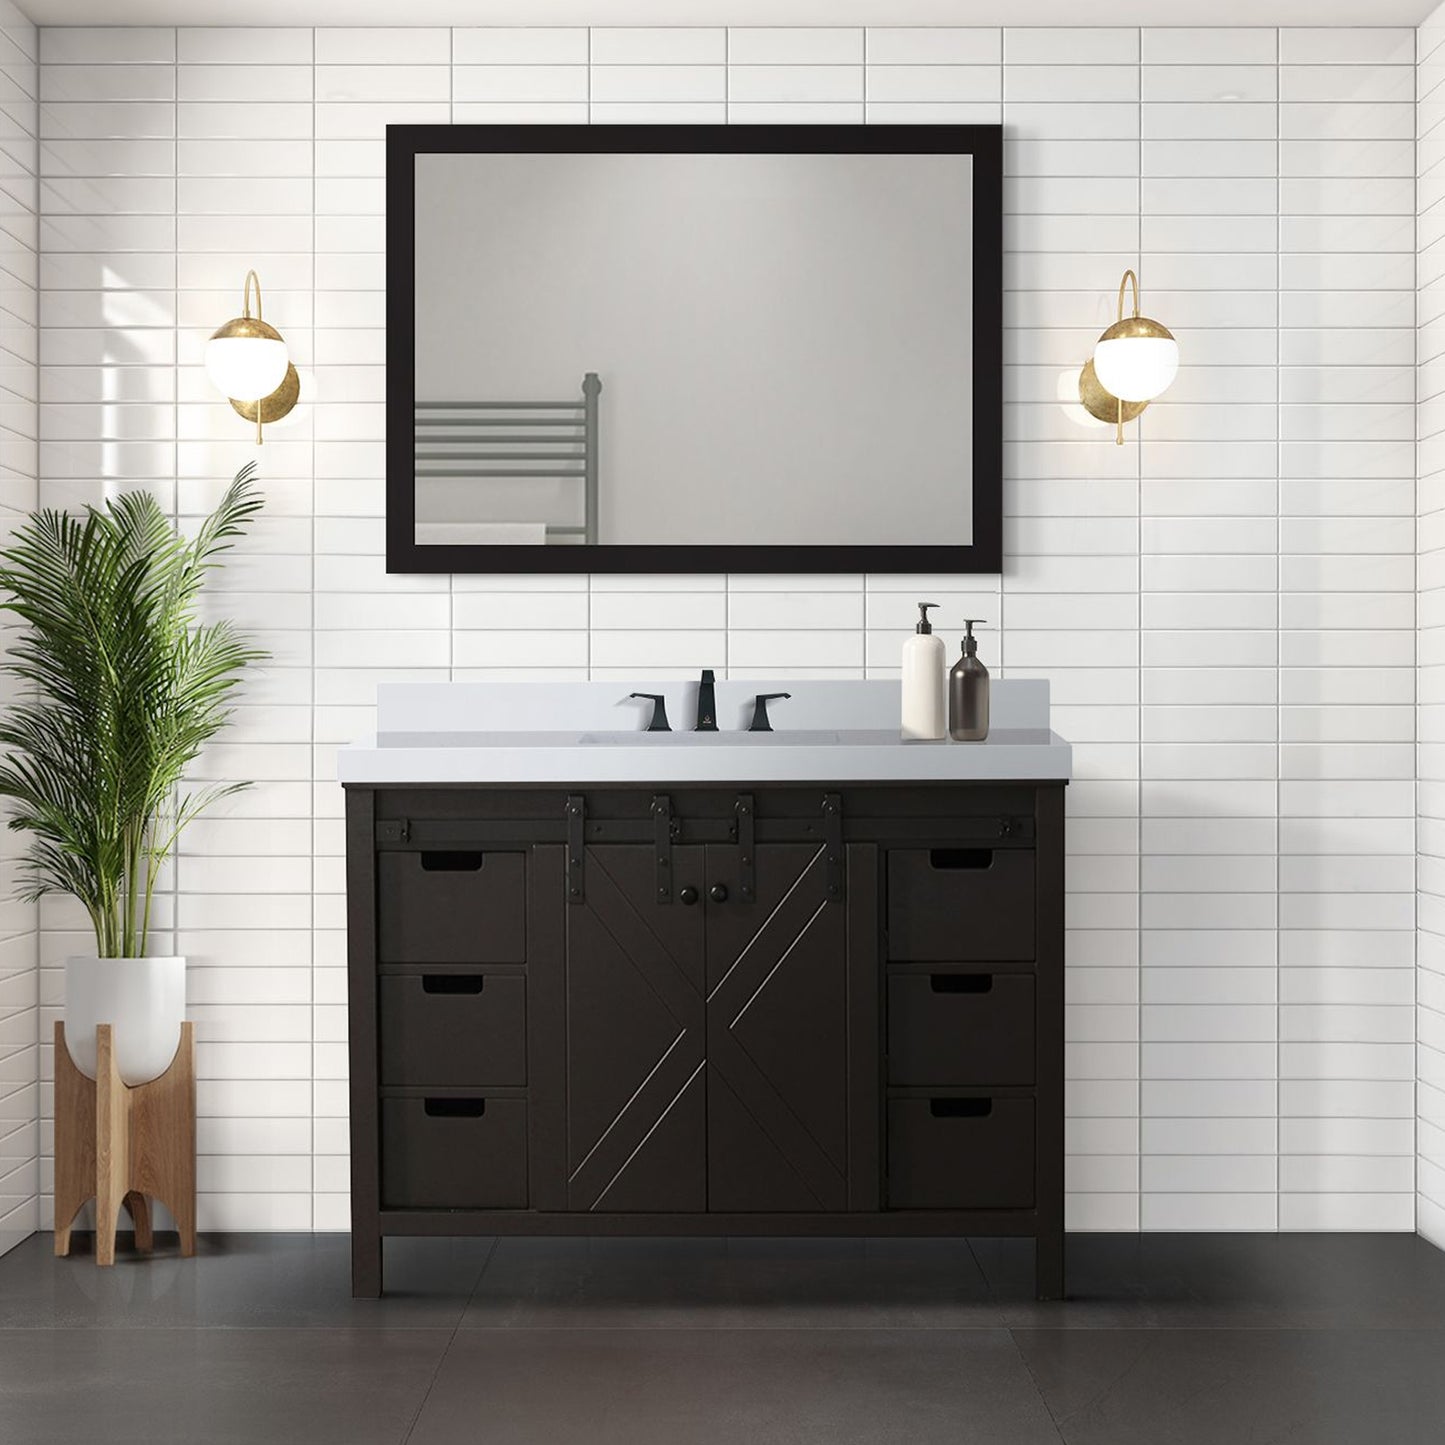 Lexora Collection Marsyas 48 inch Bath Vanity, White Quartz Countertop and Faucet Set - Luxe Bathroom Vanities